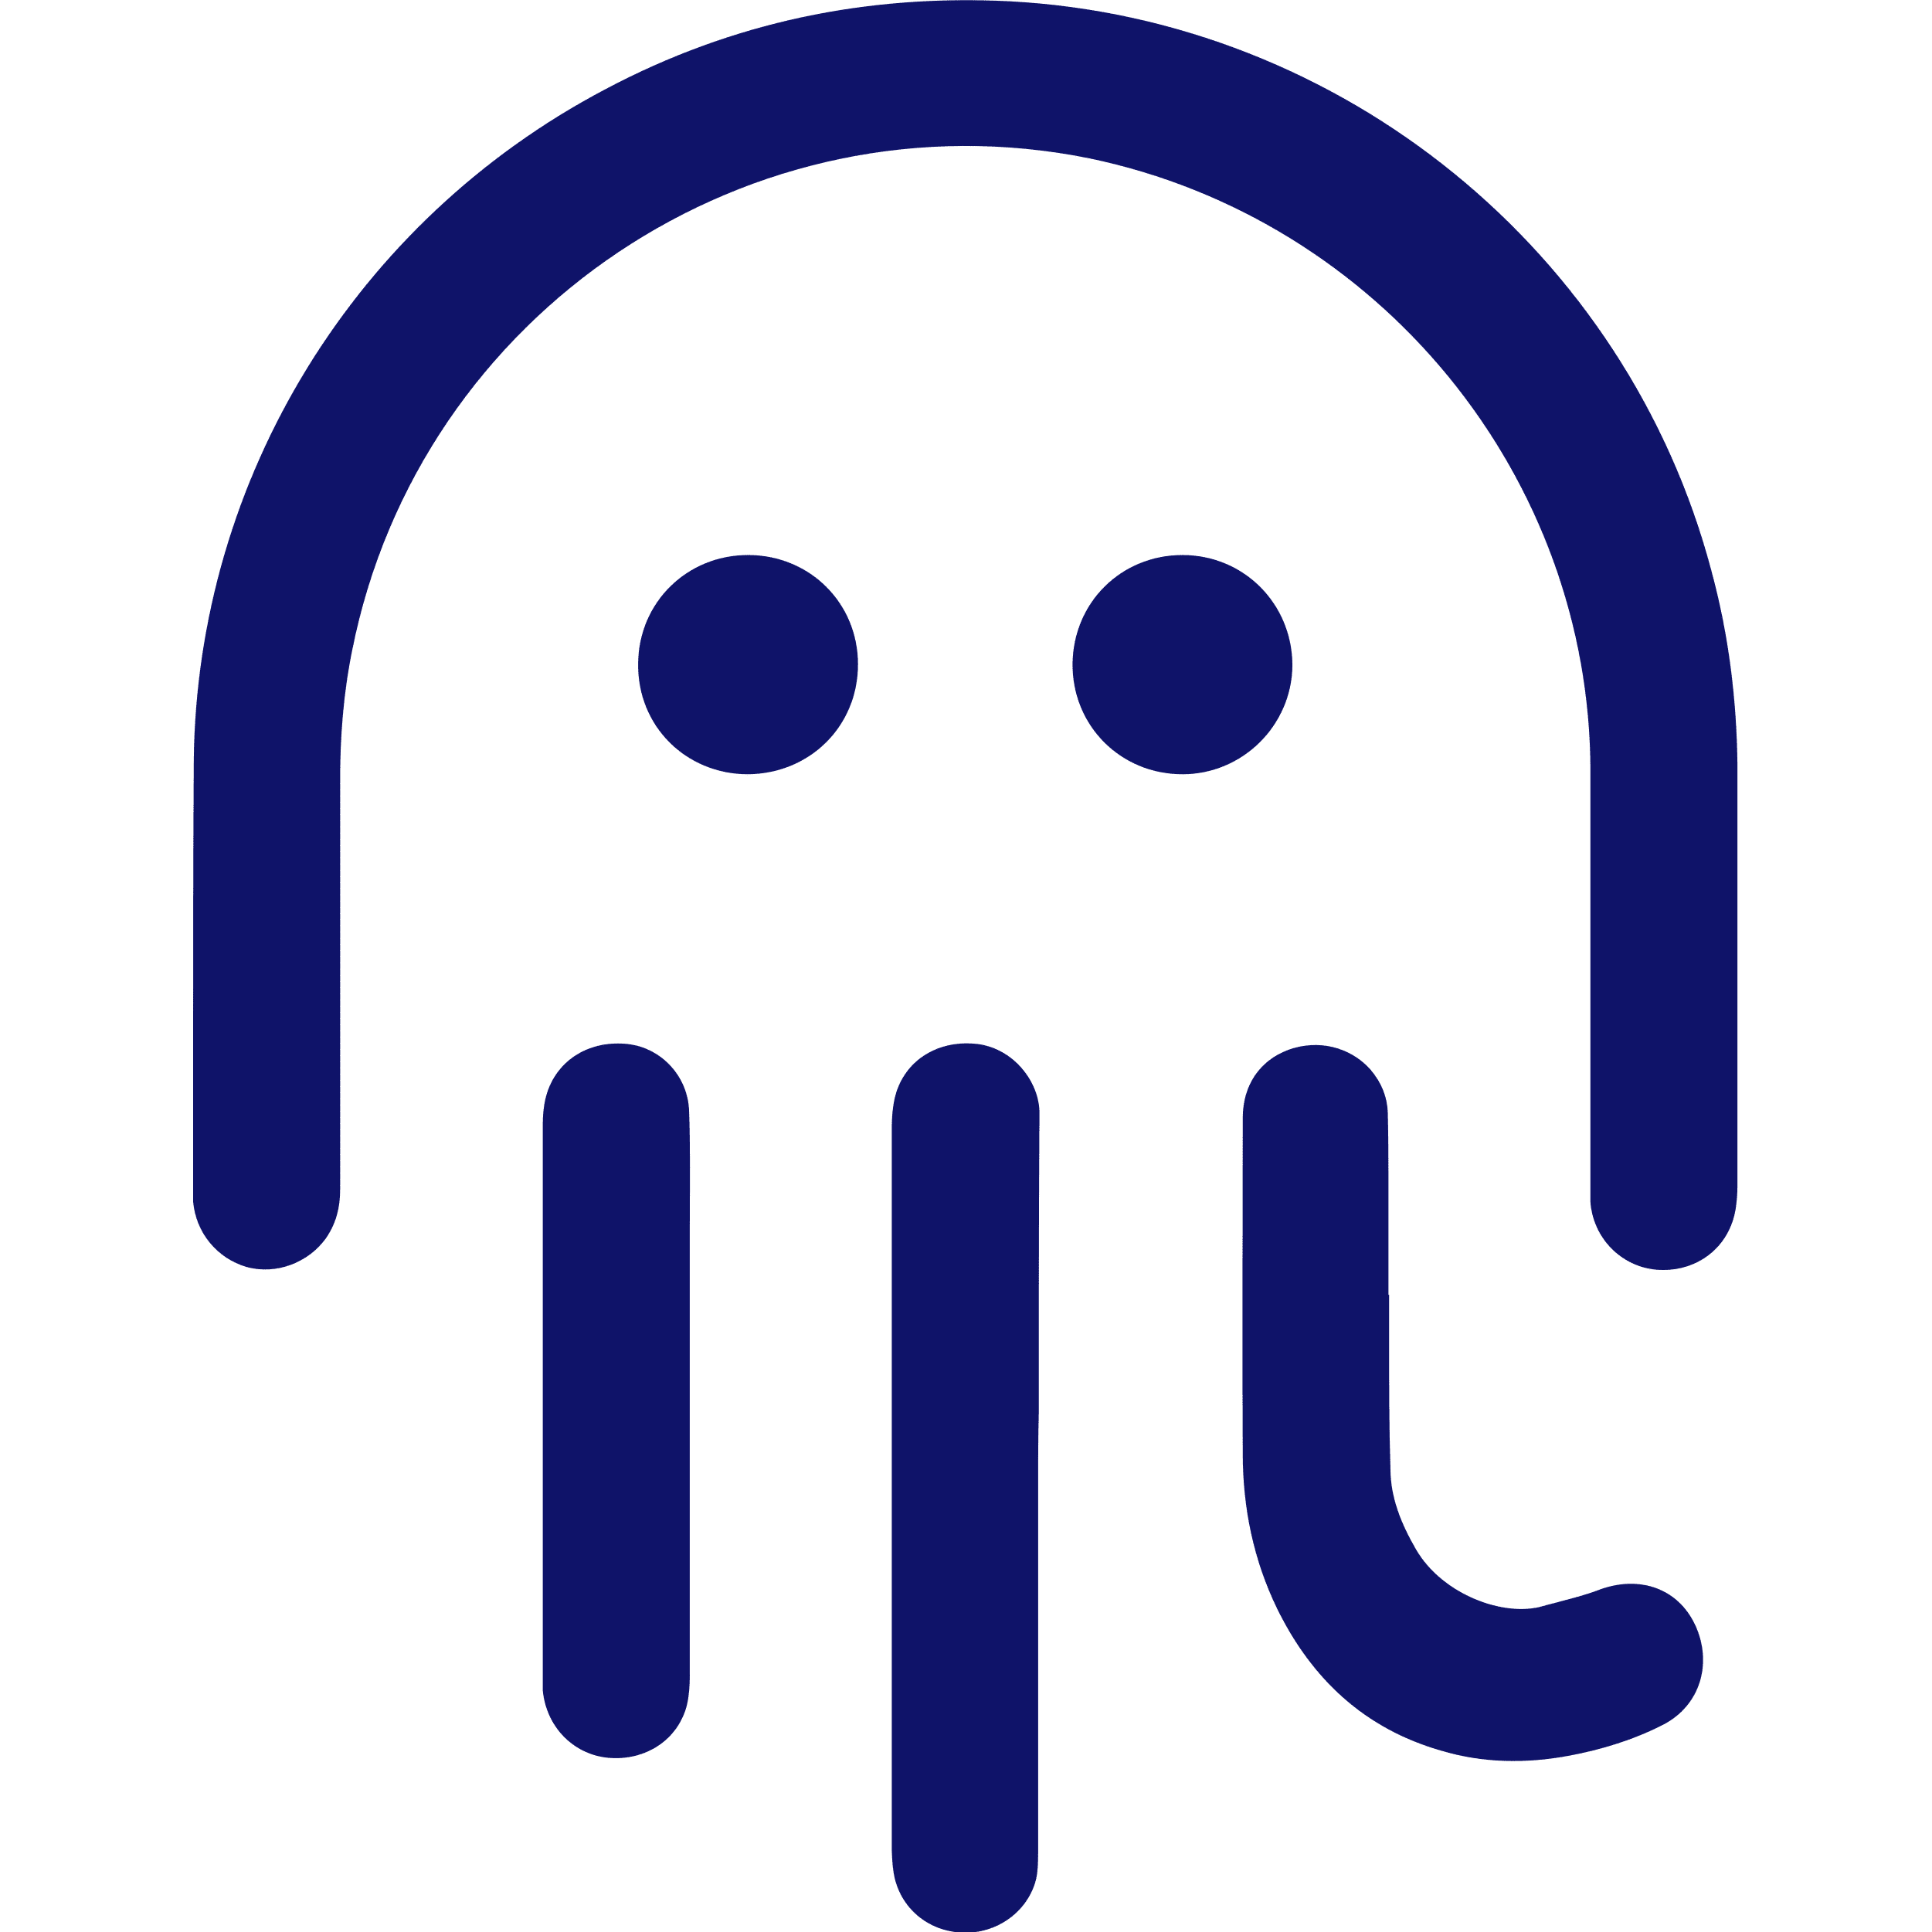 Octopus Network (OCT) logo